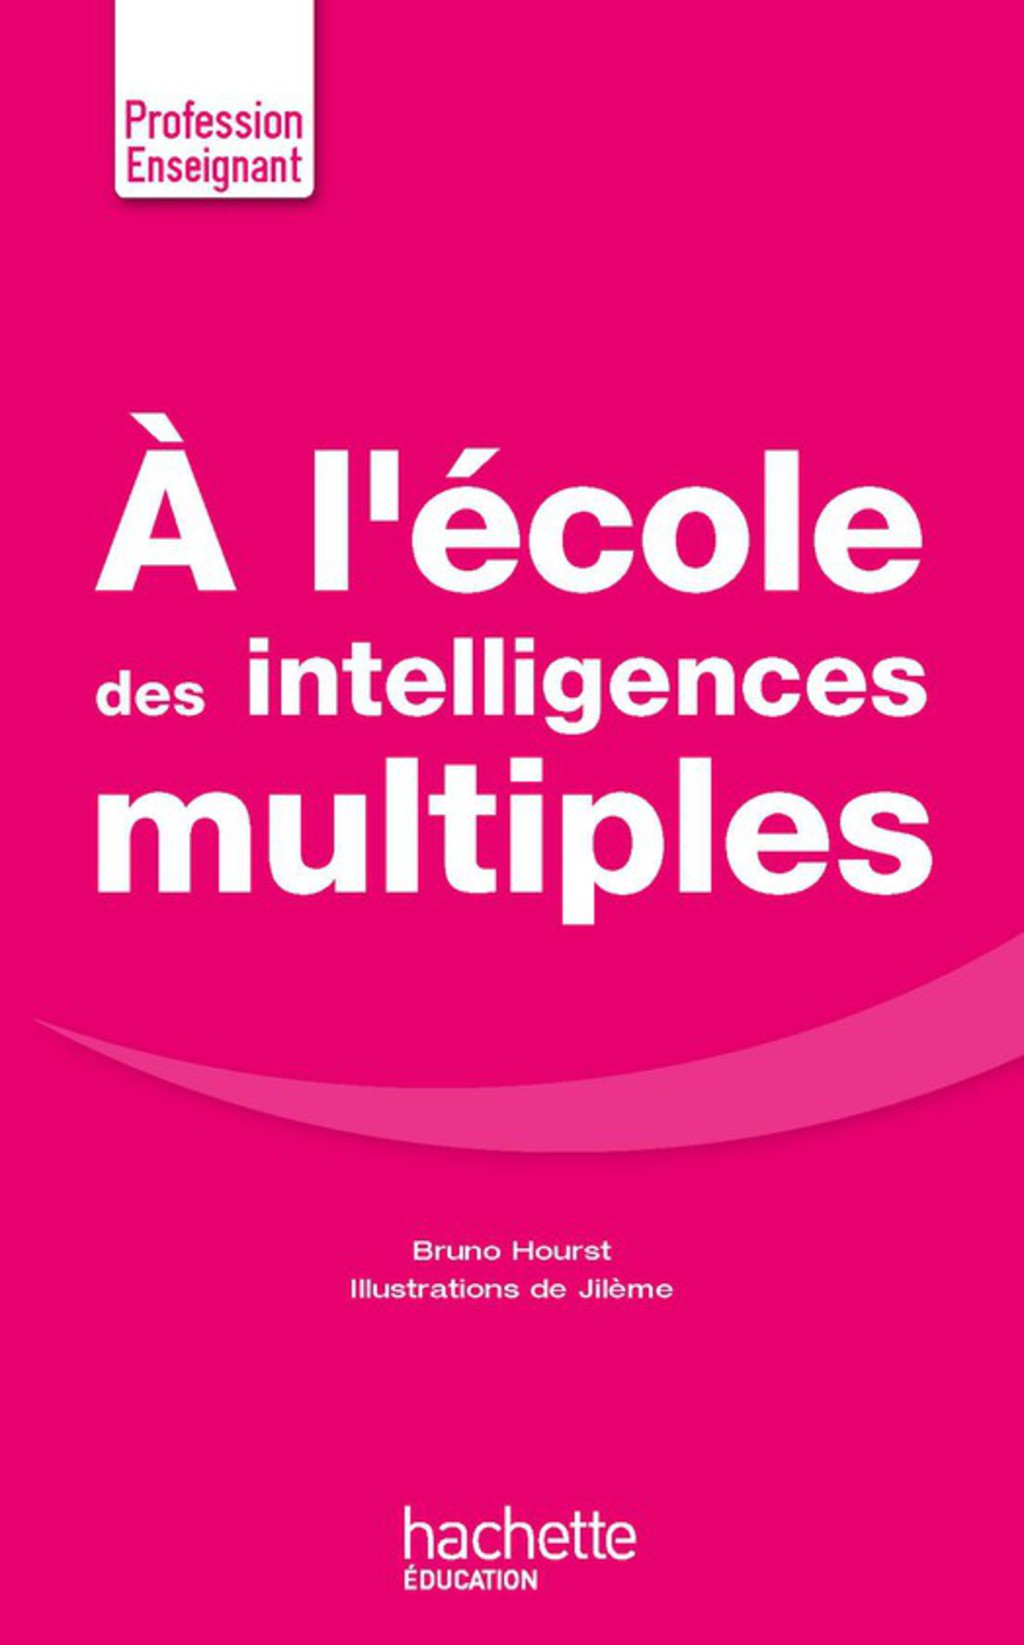 ISBN 9782010000232 product image for A l'Ã©cole des intelligences multiples (eBook) | upcitemdb.com